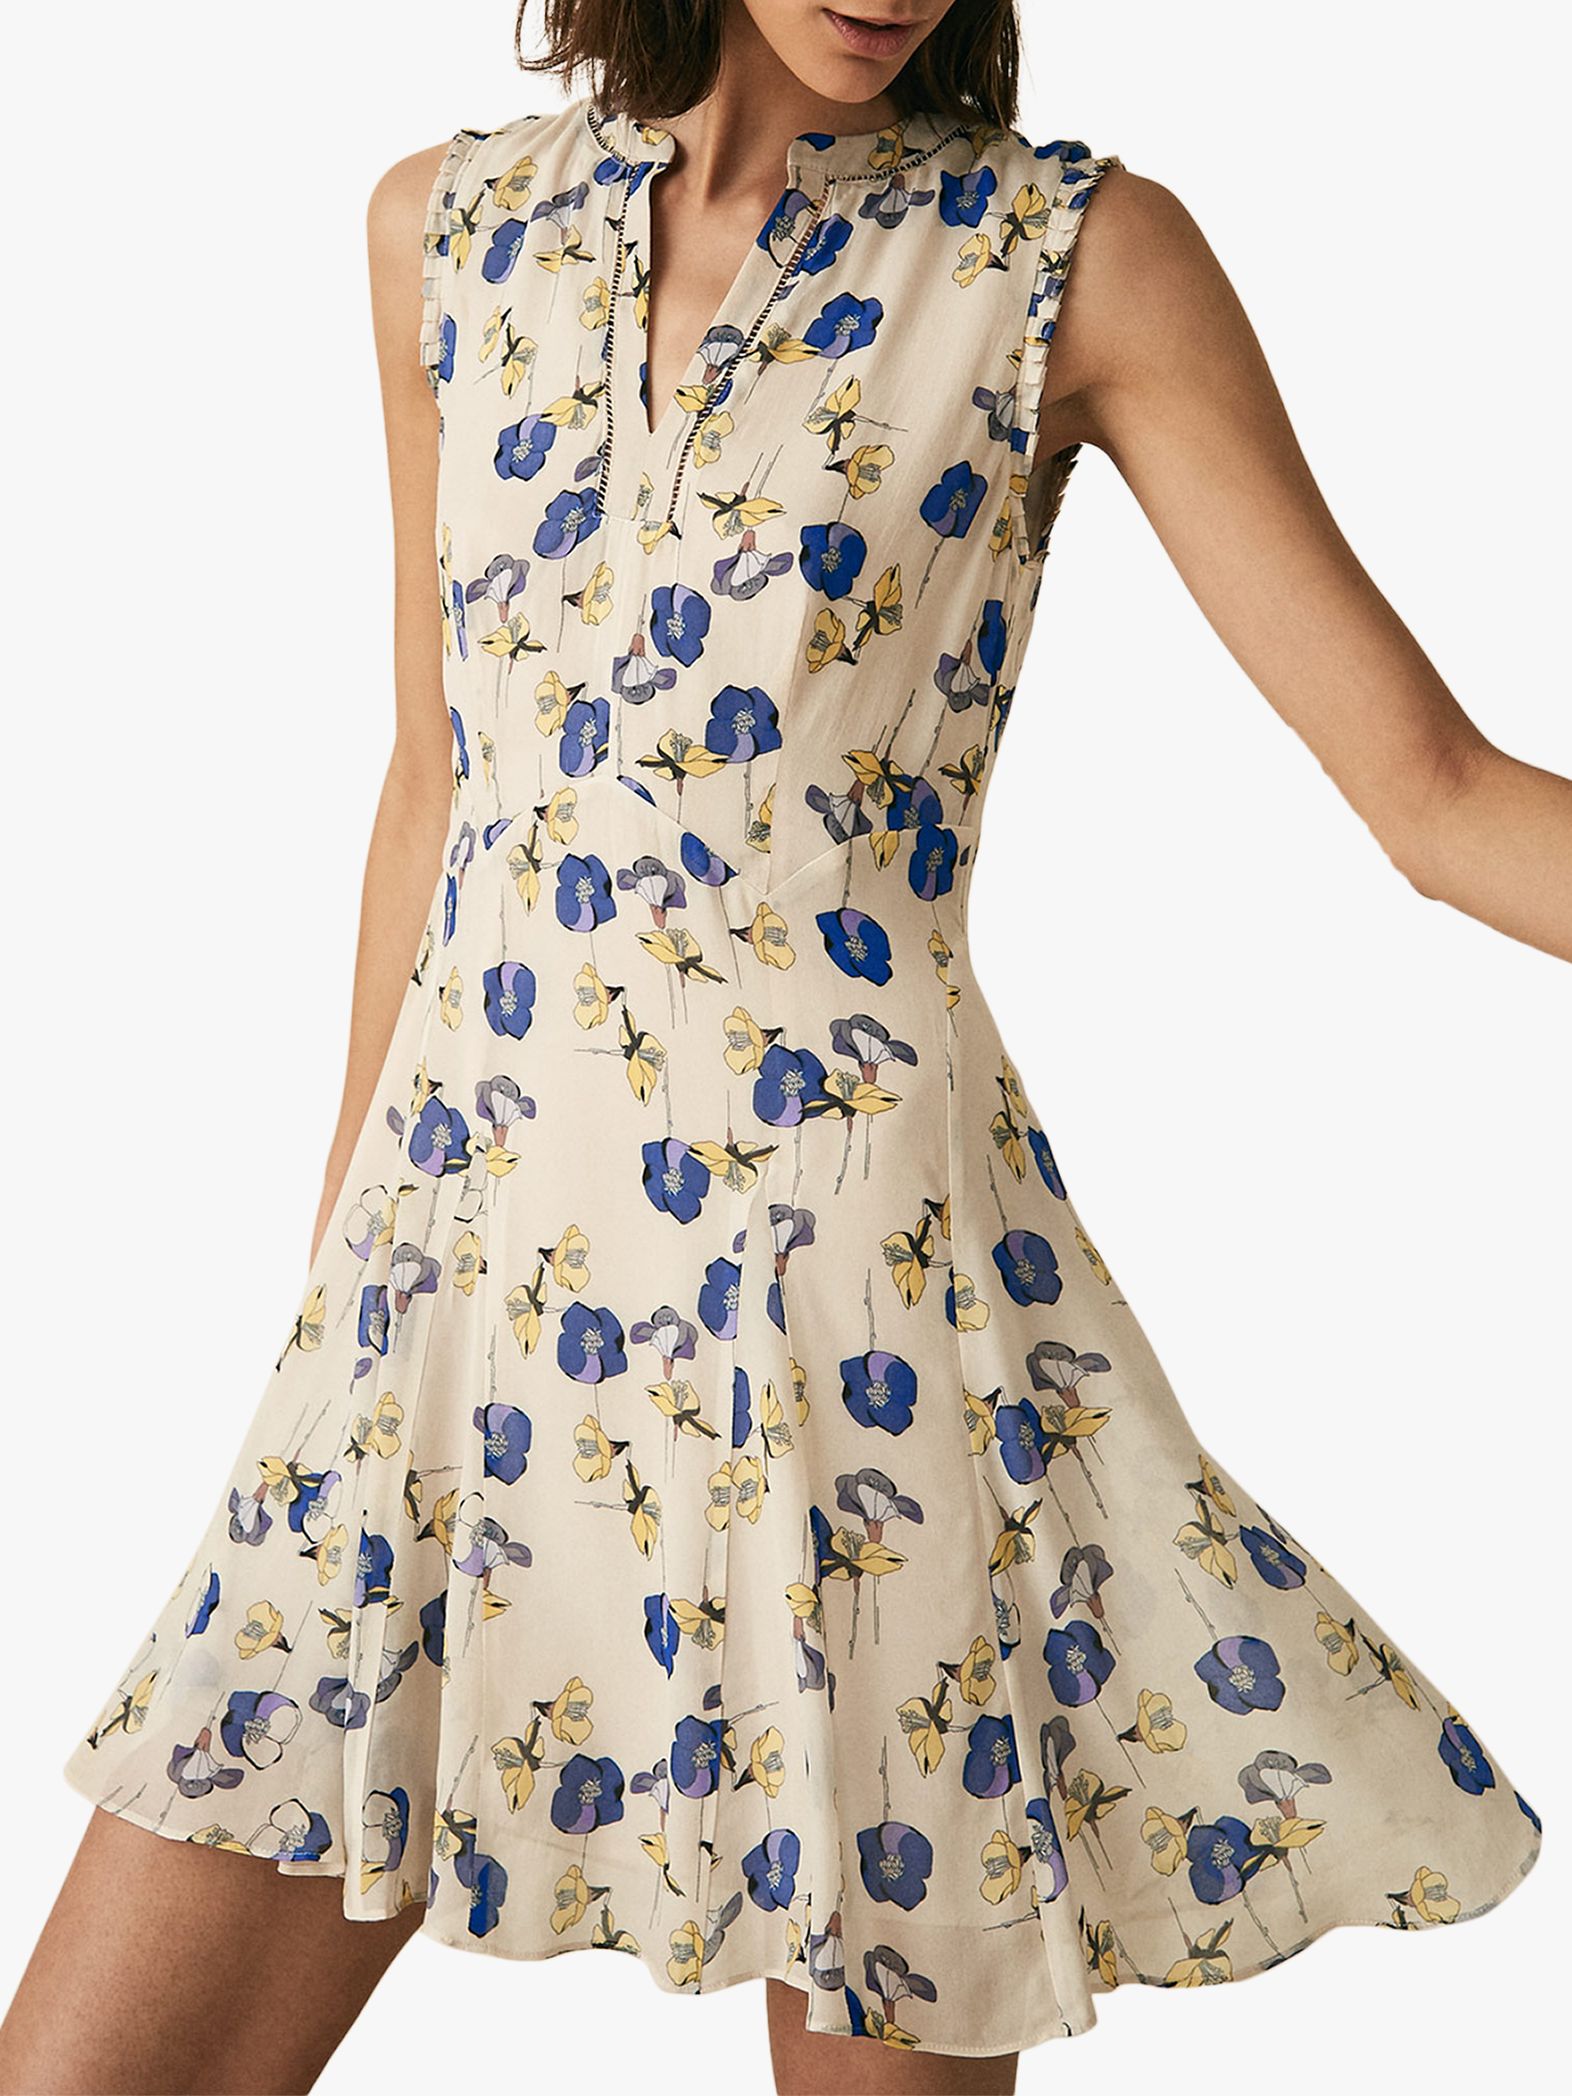 Reiss Mika Floral Dress, Blue/White